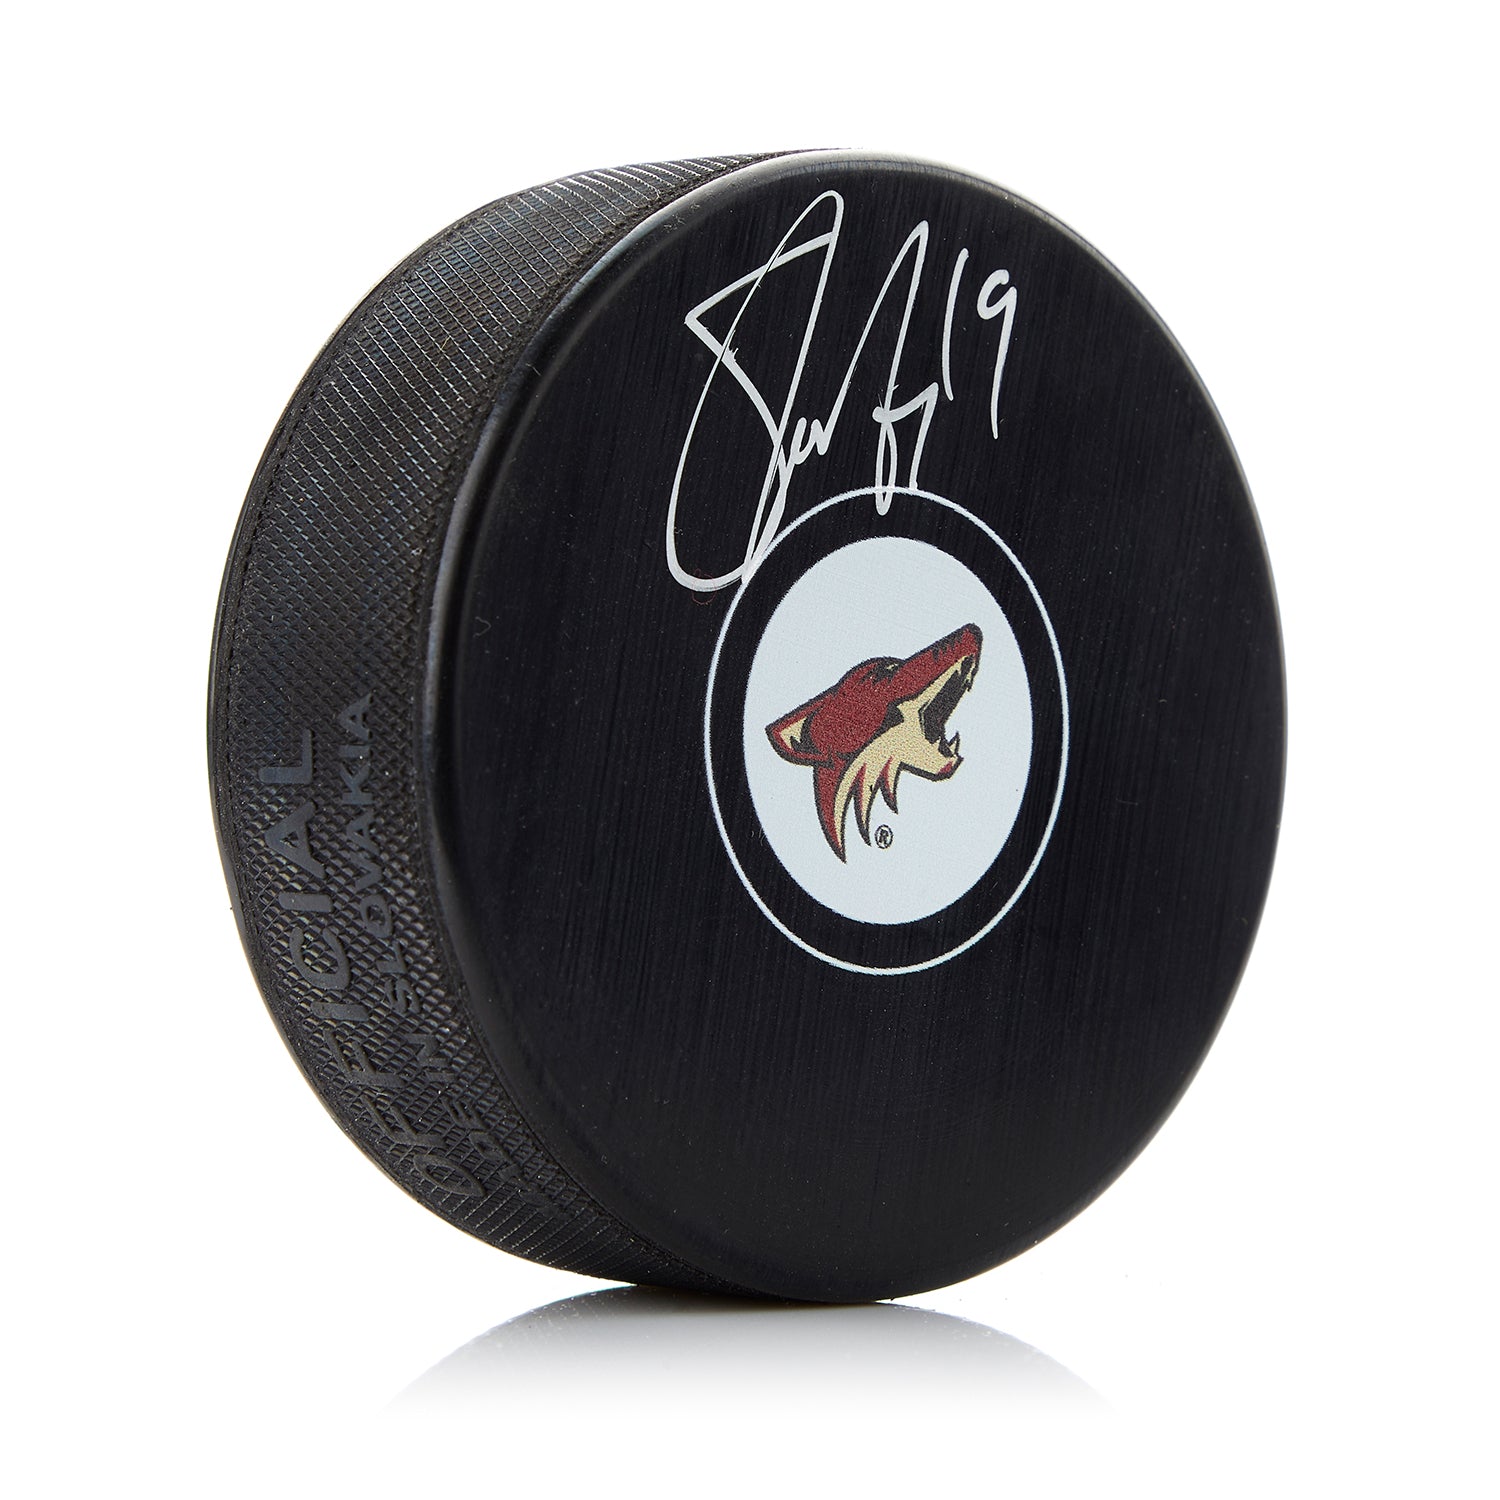 Shane Doan Arizona Coyotes Autographed Hockey Puck